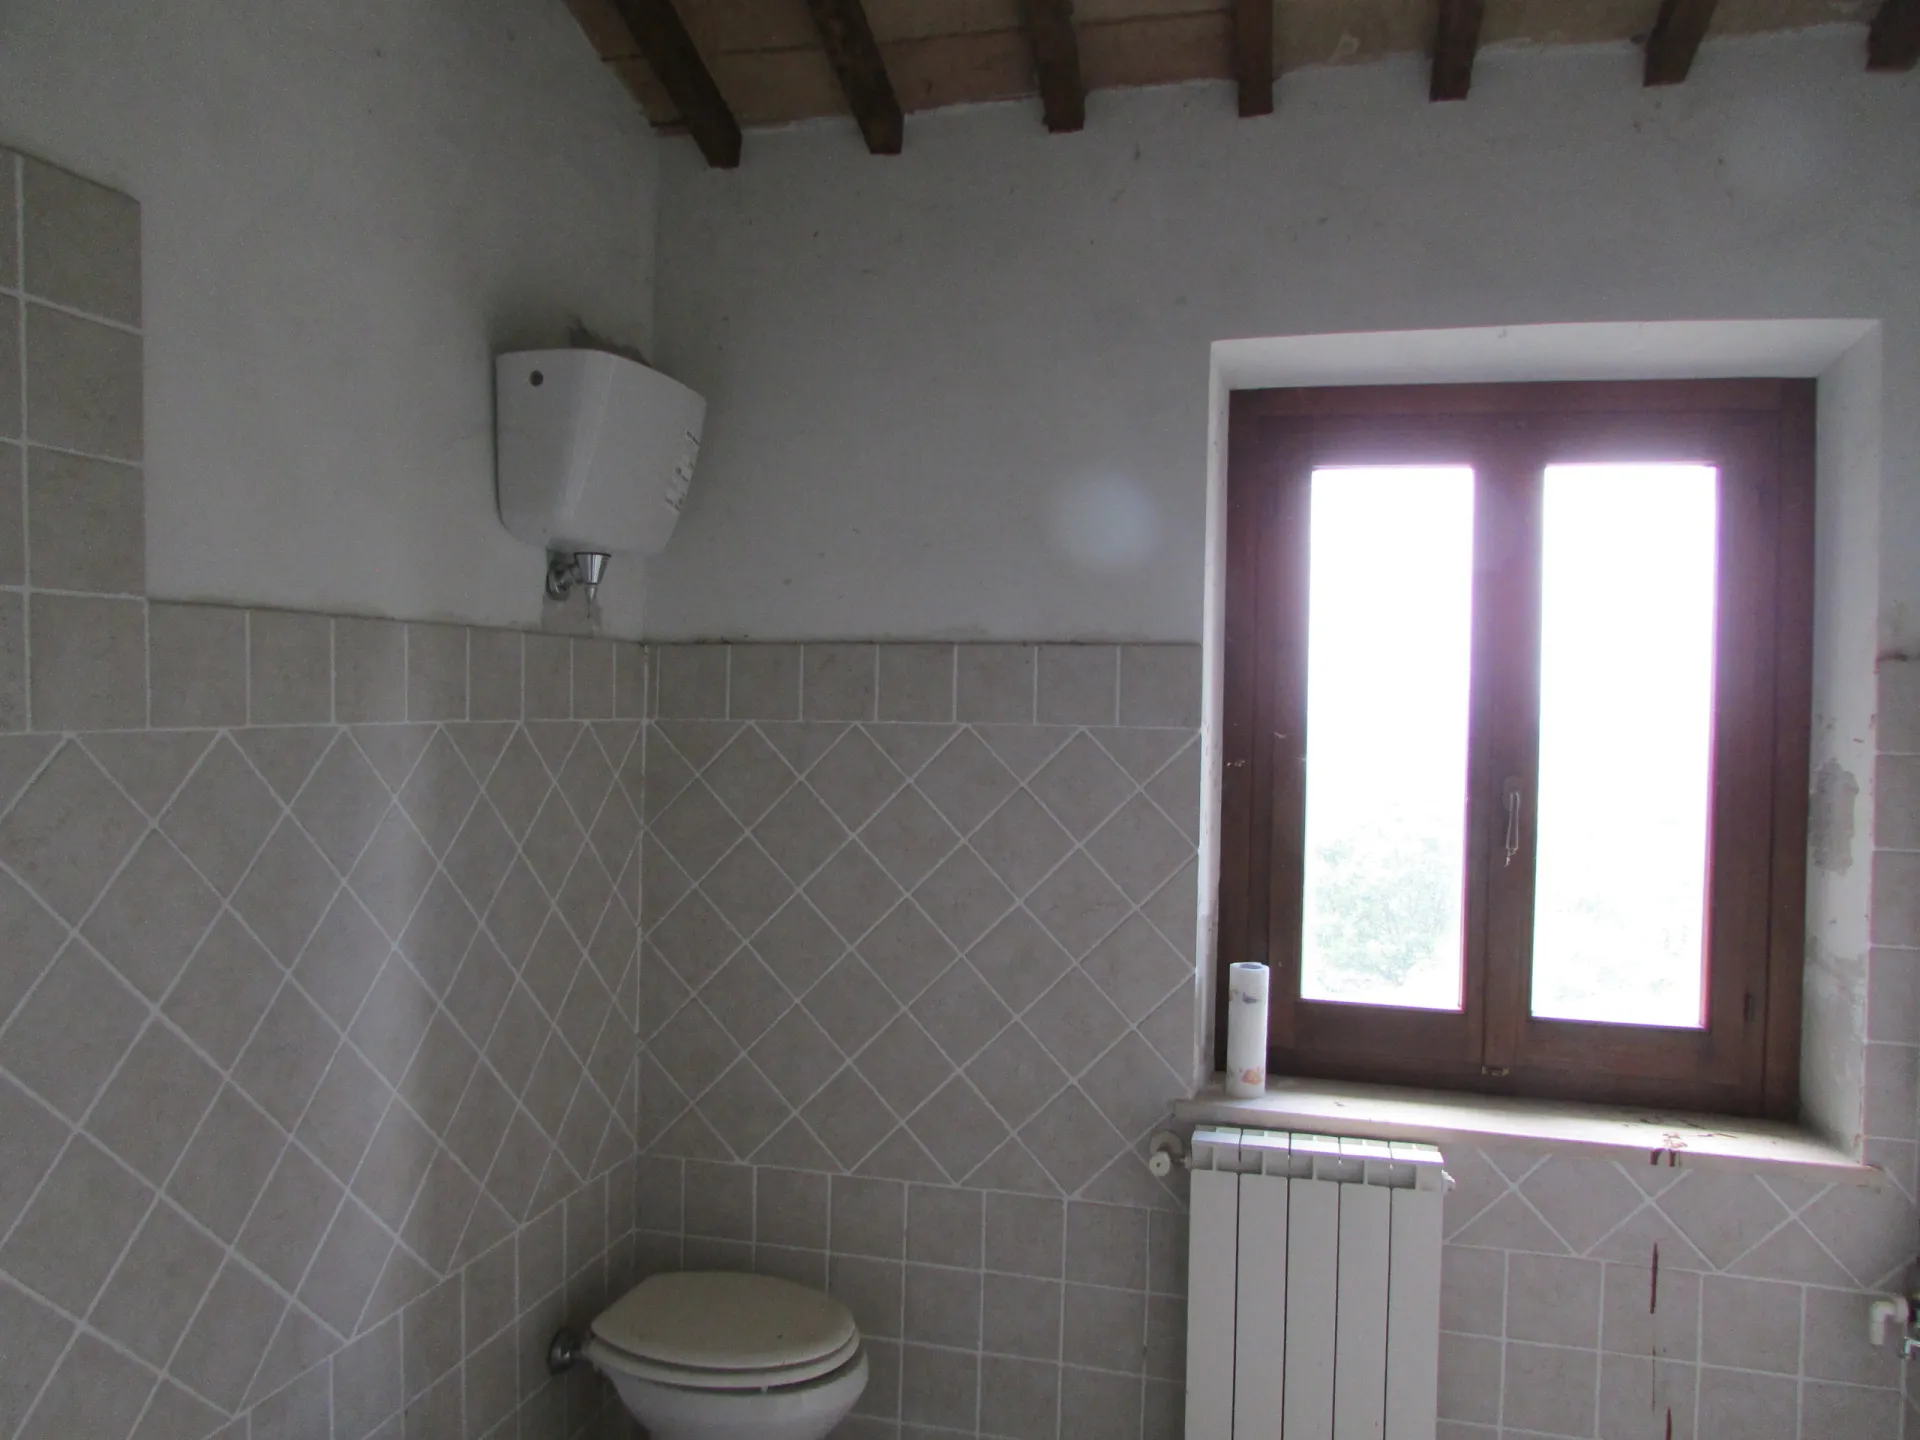 Immagine per Porzione di casa in vendita a Massa Martana via Località Pugliano 27